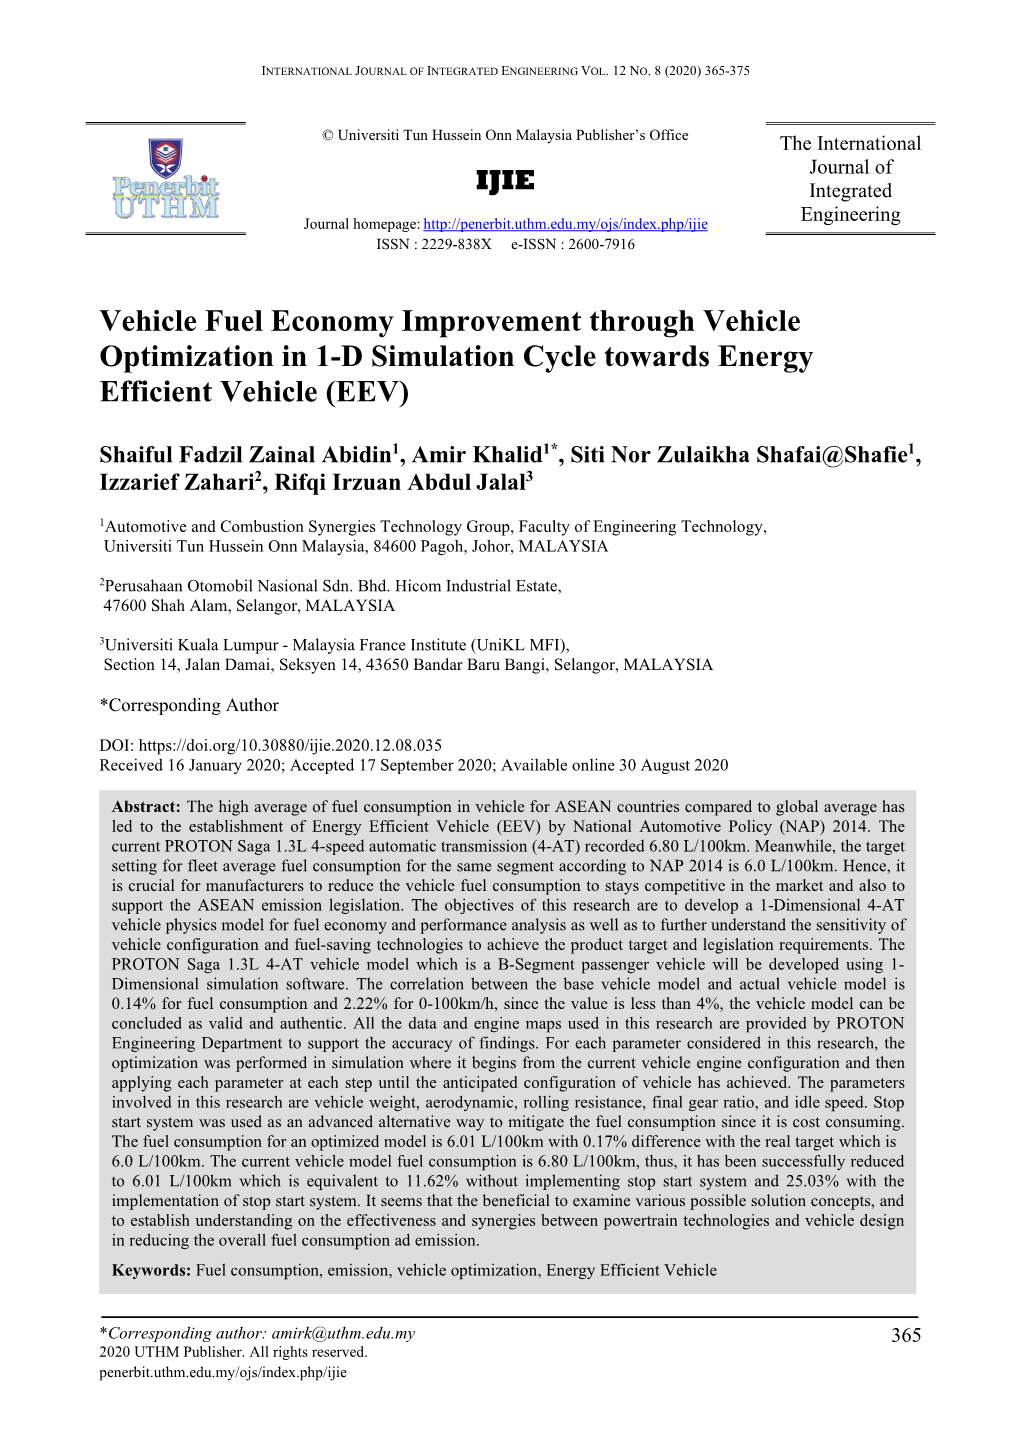 Vehicle Fuel Economy Improvement Through Vehicle Optimization in 1-D Simulation Cycle Towards Energy Efficient Vehicle (EEV)